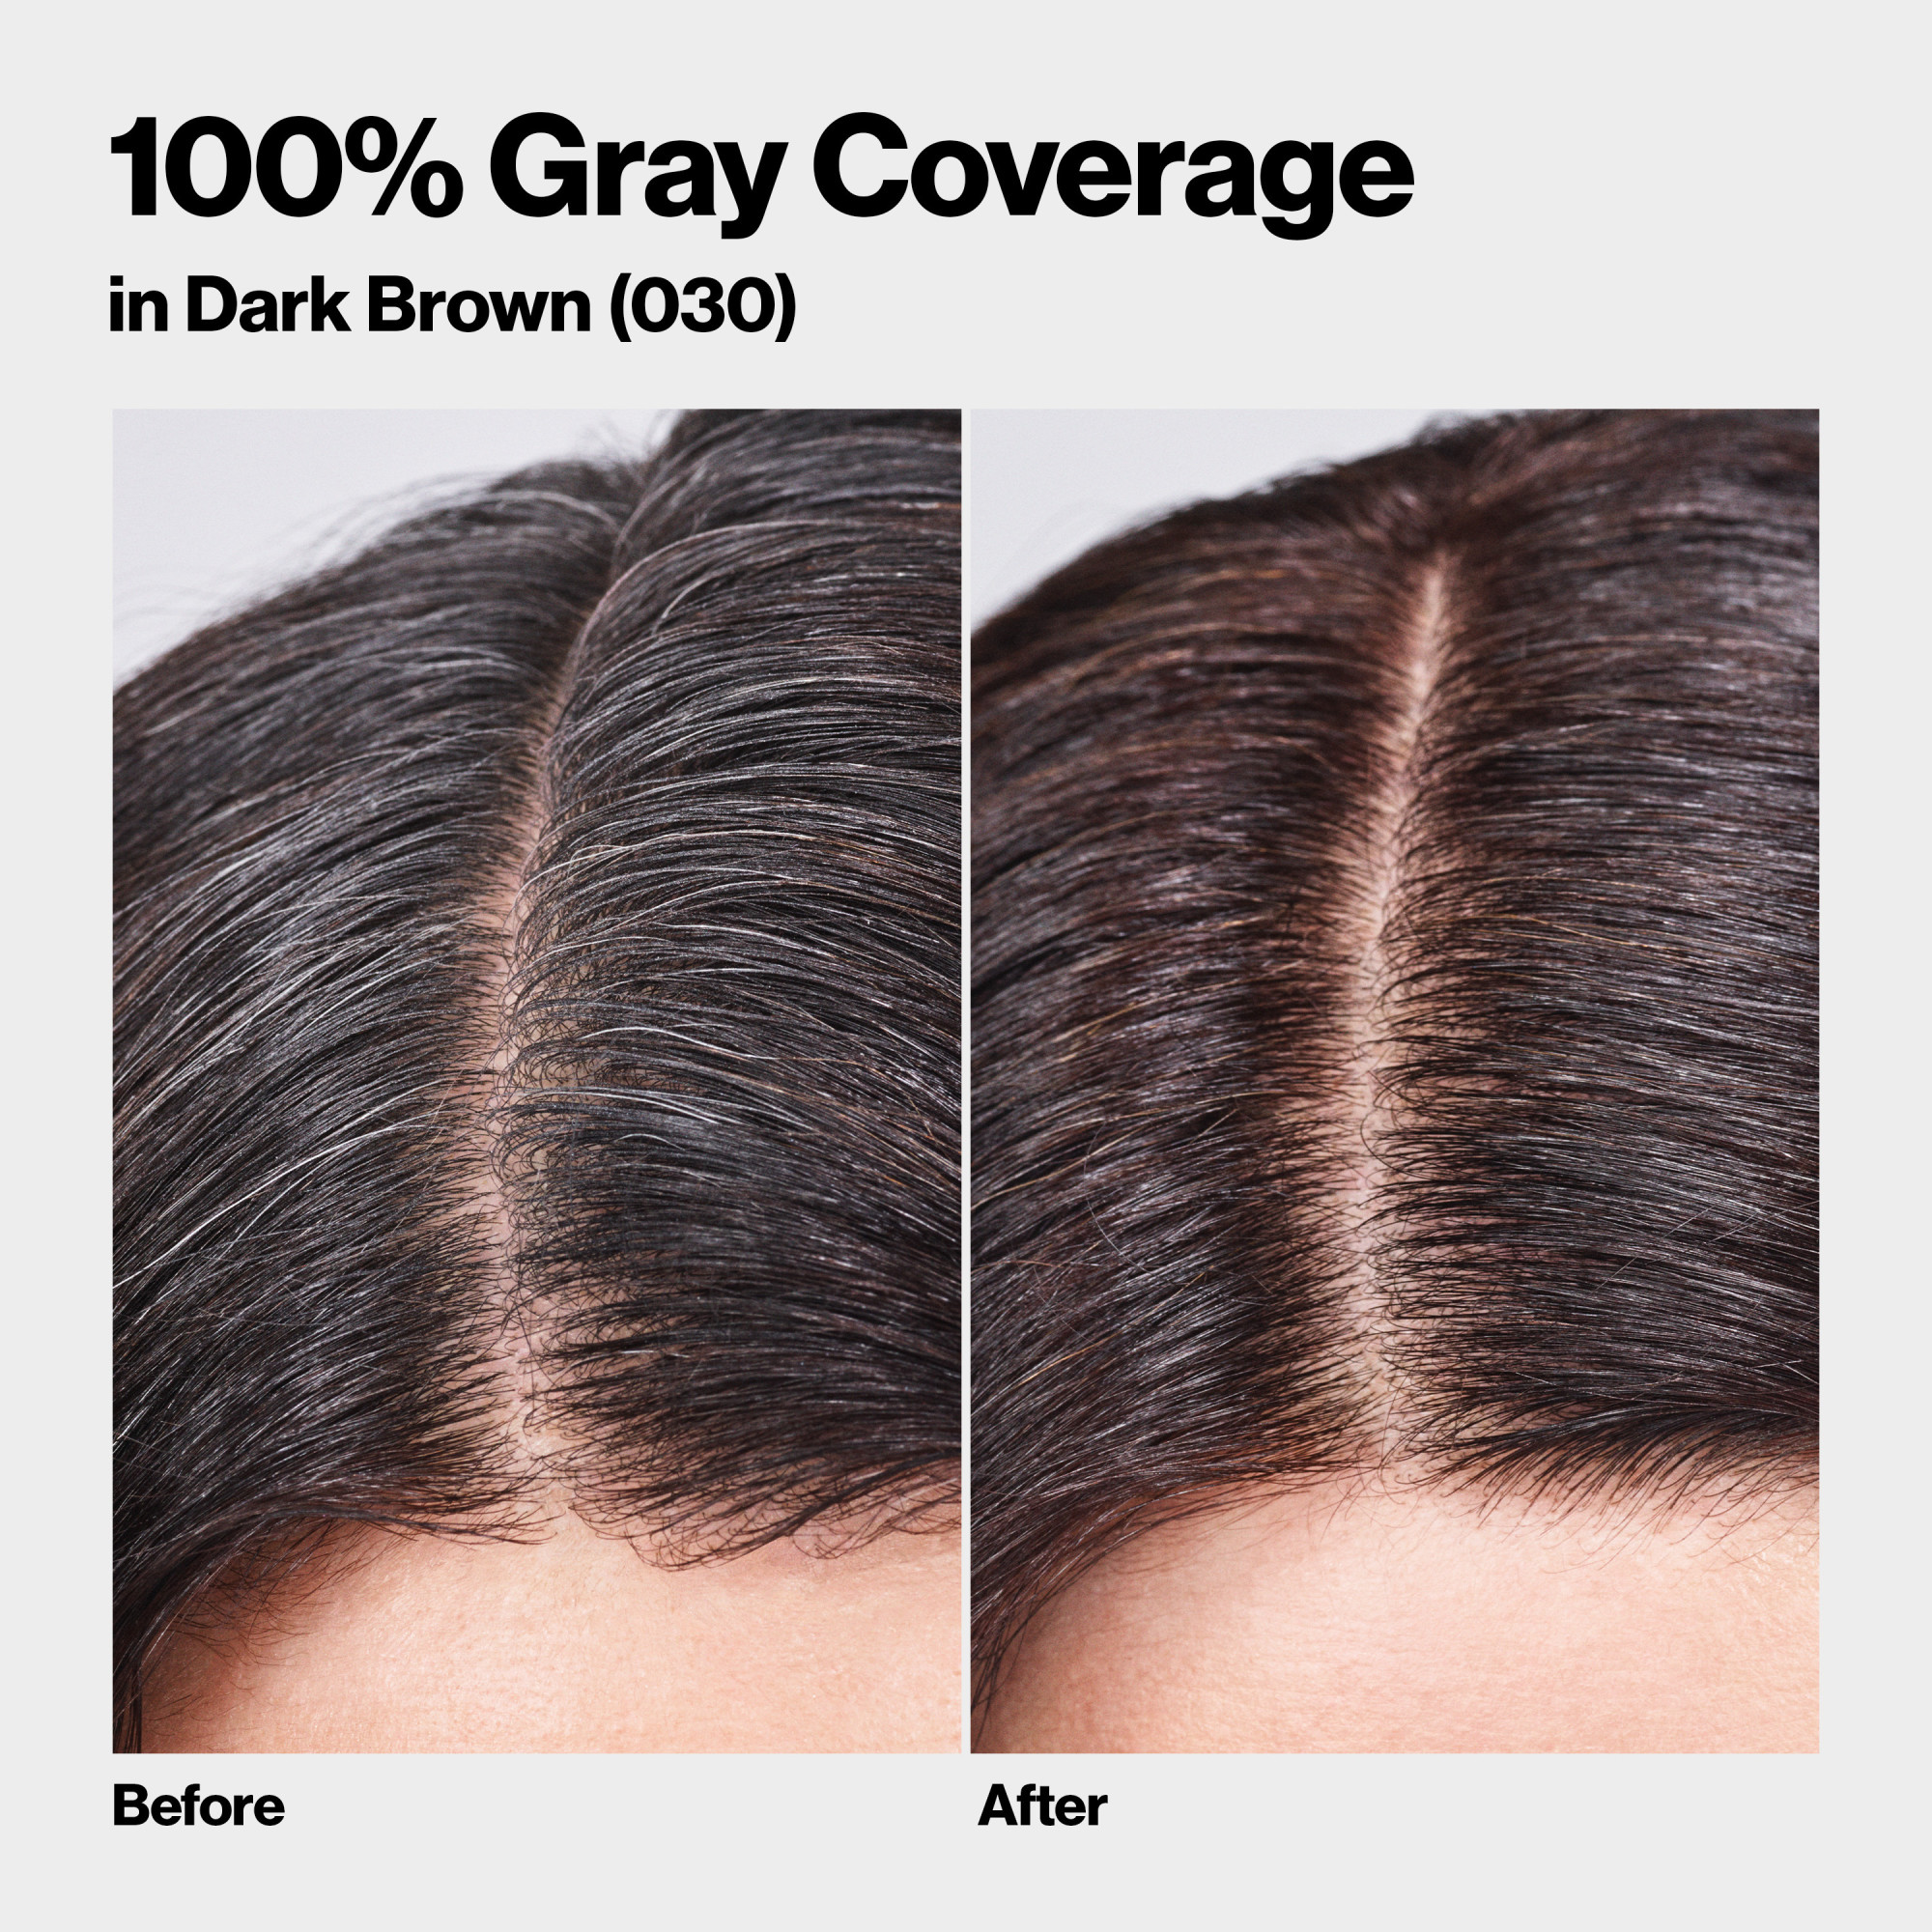 NEW Revlon Colorsilk Beautiful Permanent Hair Color, No Mess Formula,  081 Light Blonde, 1 Pack - image 5 of 14